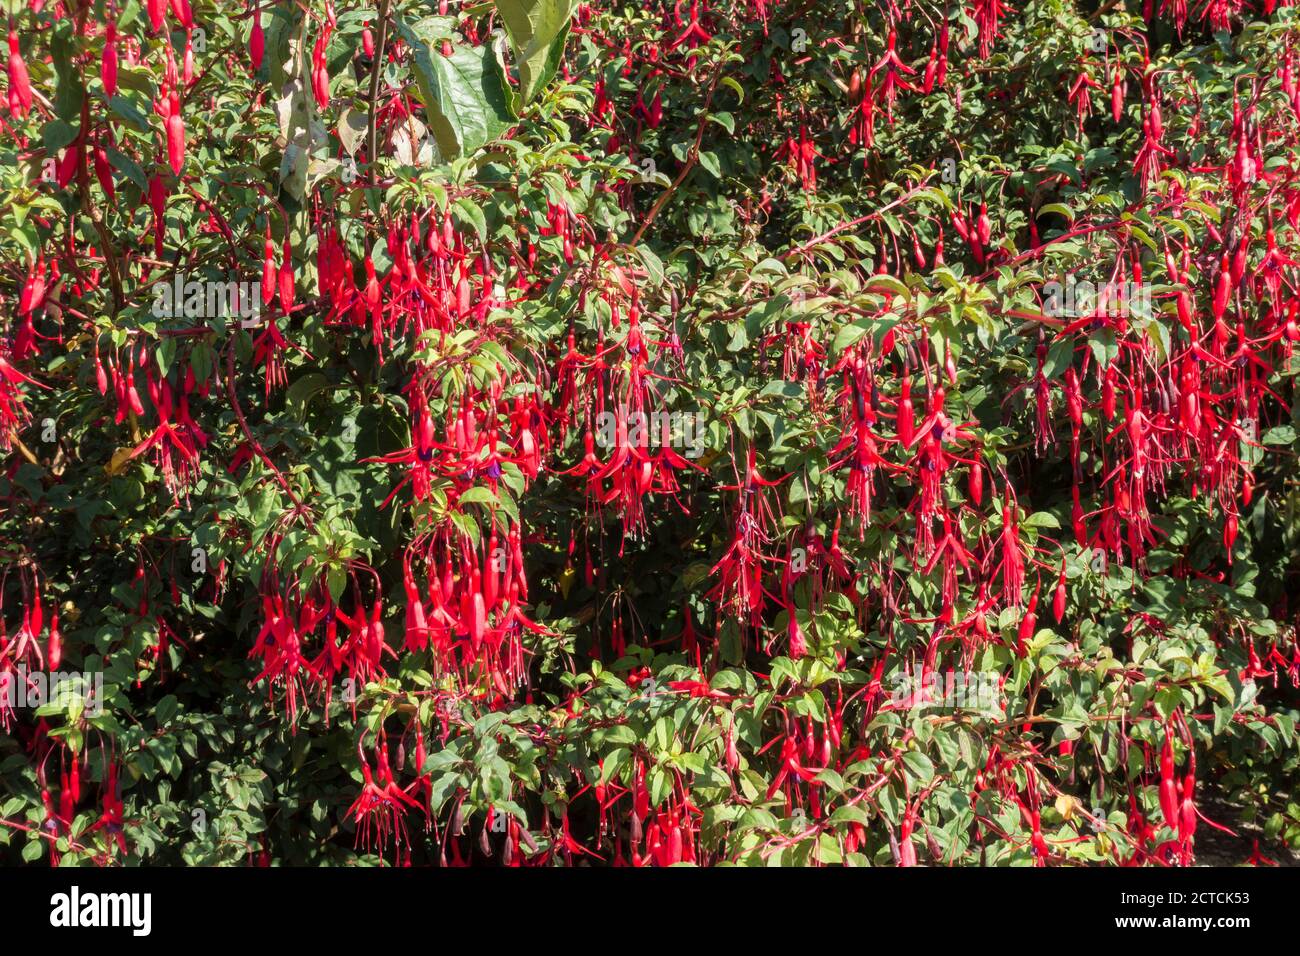 Fuchsia bush with red pendulous flowers Stock Photo